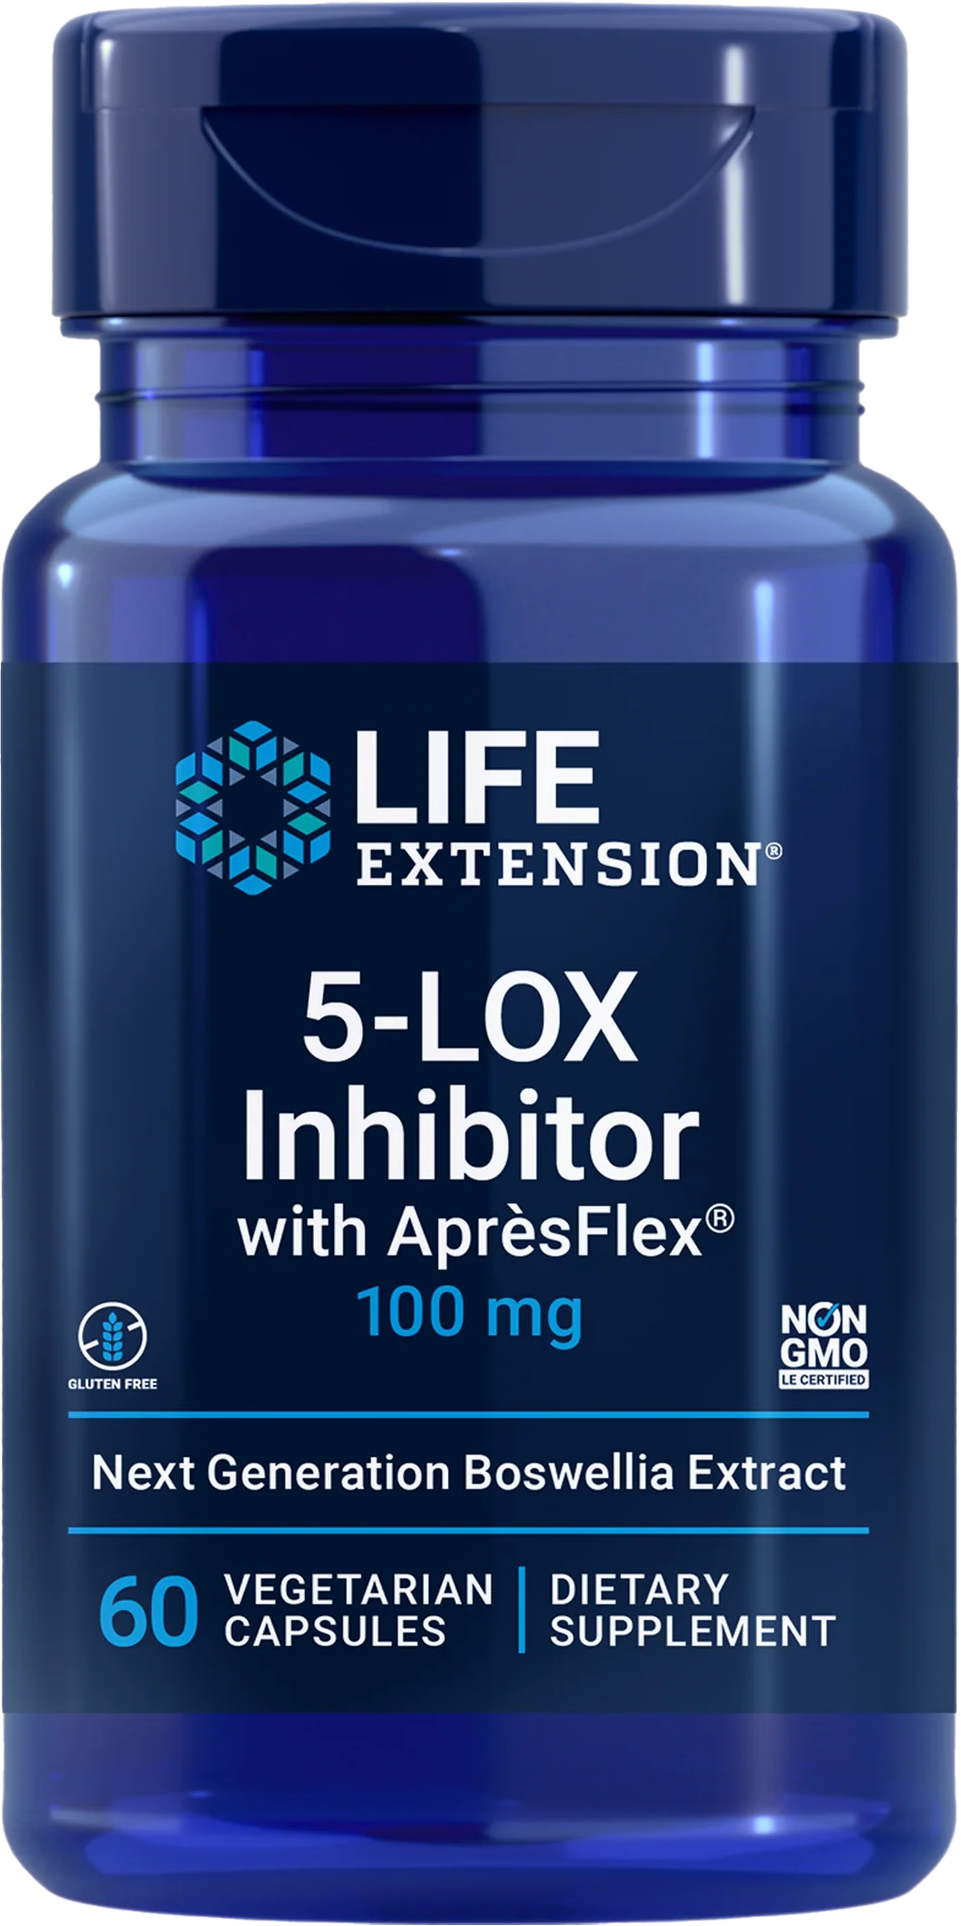 5-LOX Inhibitor with ApresFlex 100mg